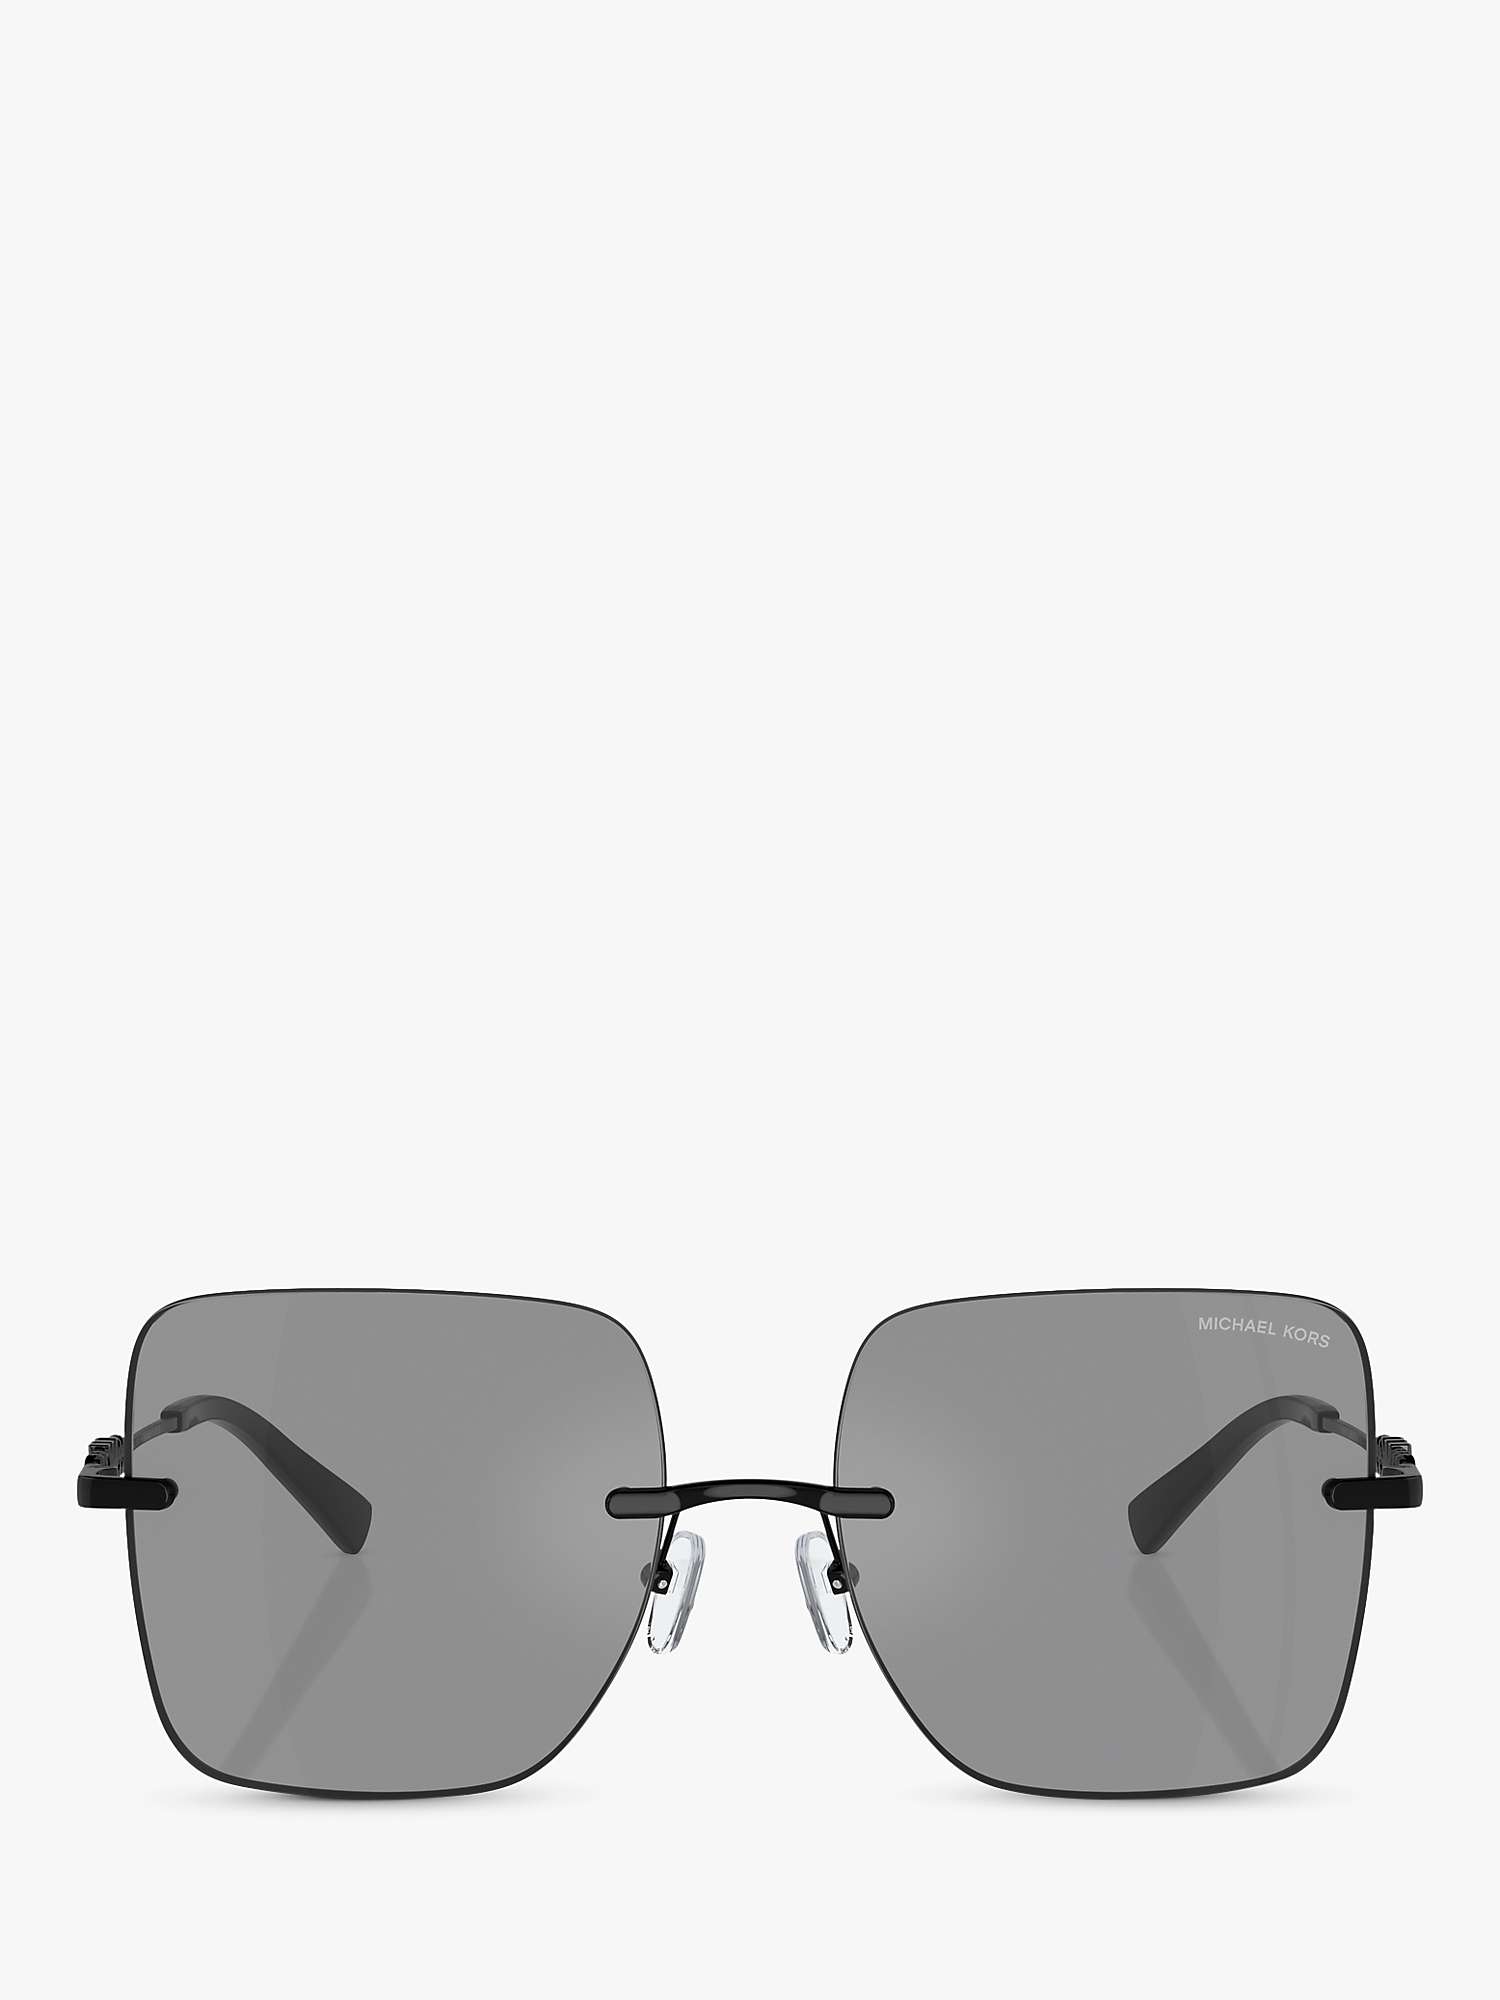 Buy Michael Kors MK1150 Women's Quebec Pillow Sunglasses, Black/Grey Mirror Online at johnlewis.com